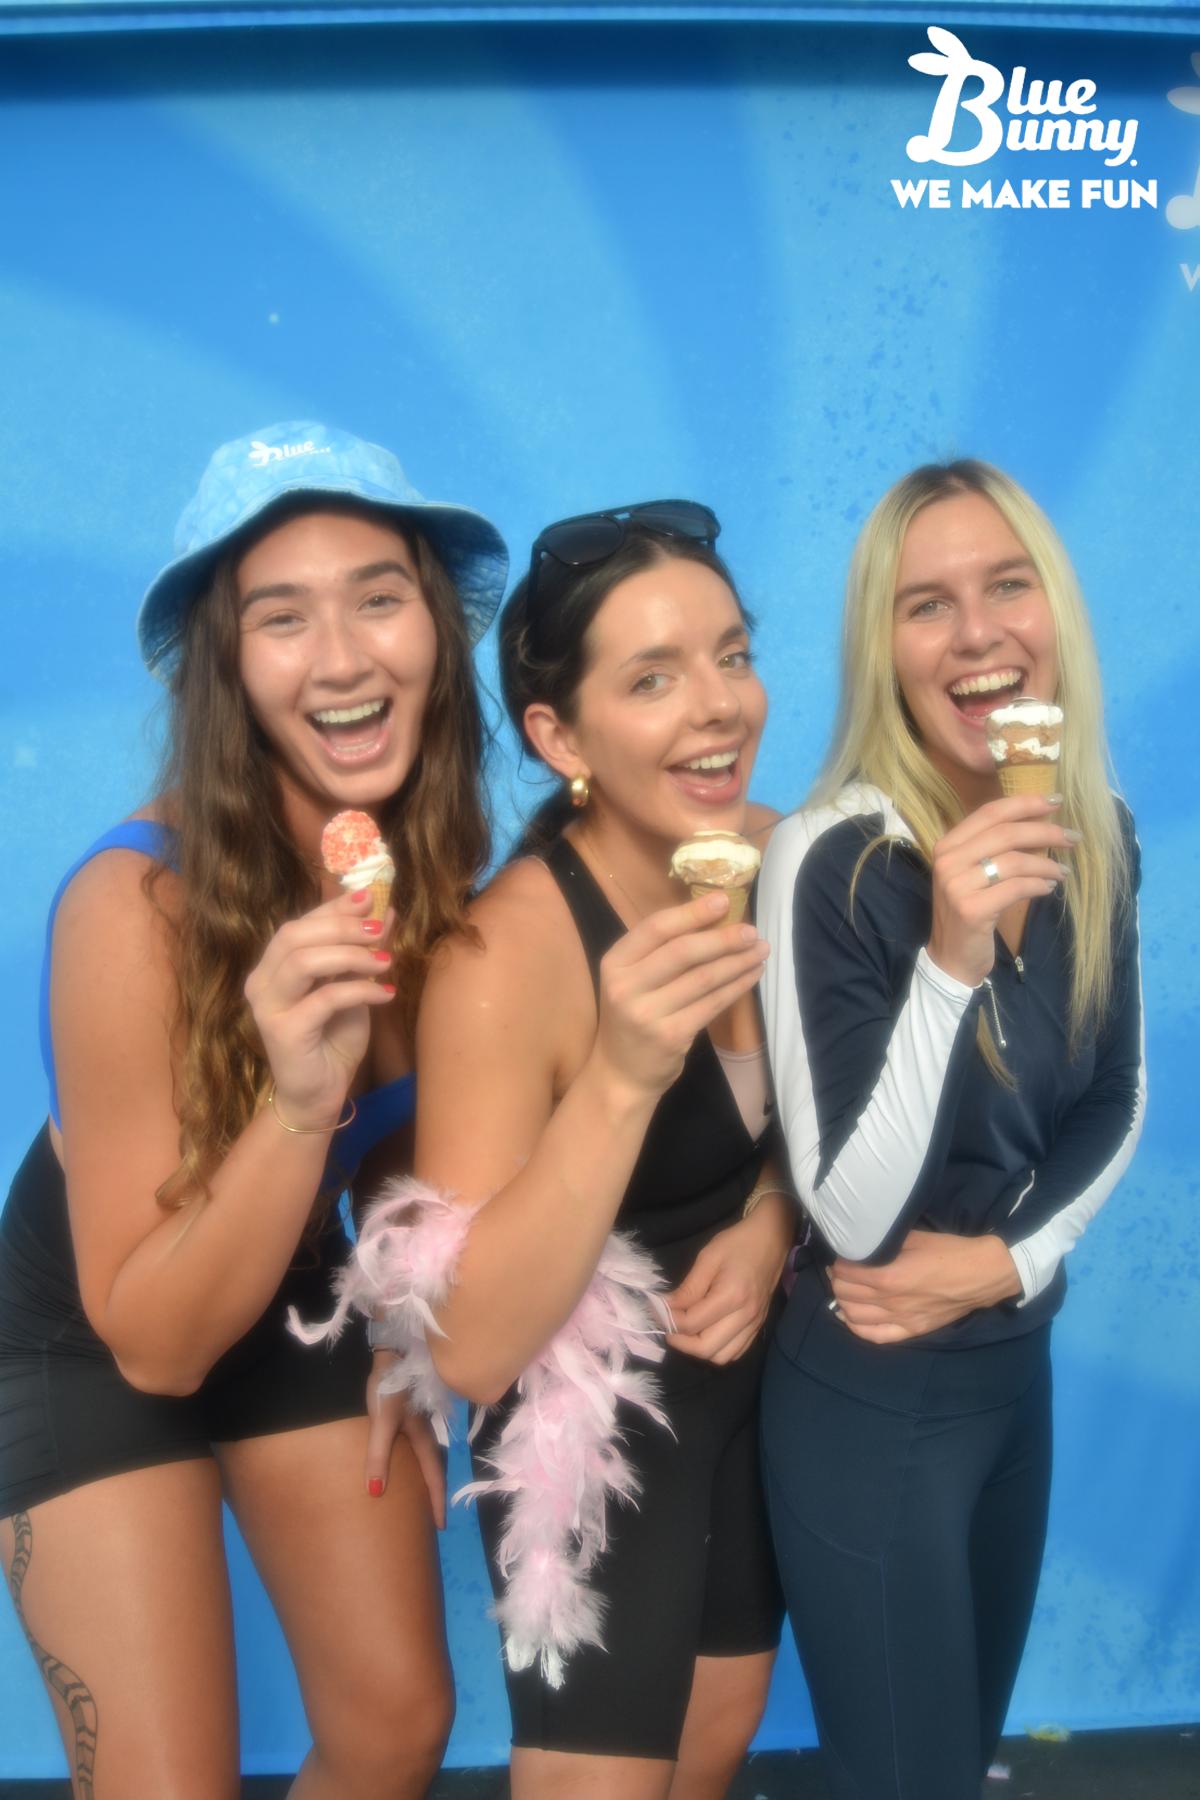 Three women leaning toward the camera with ice cream